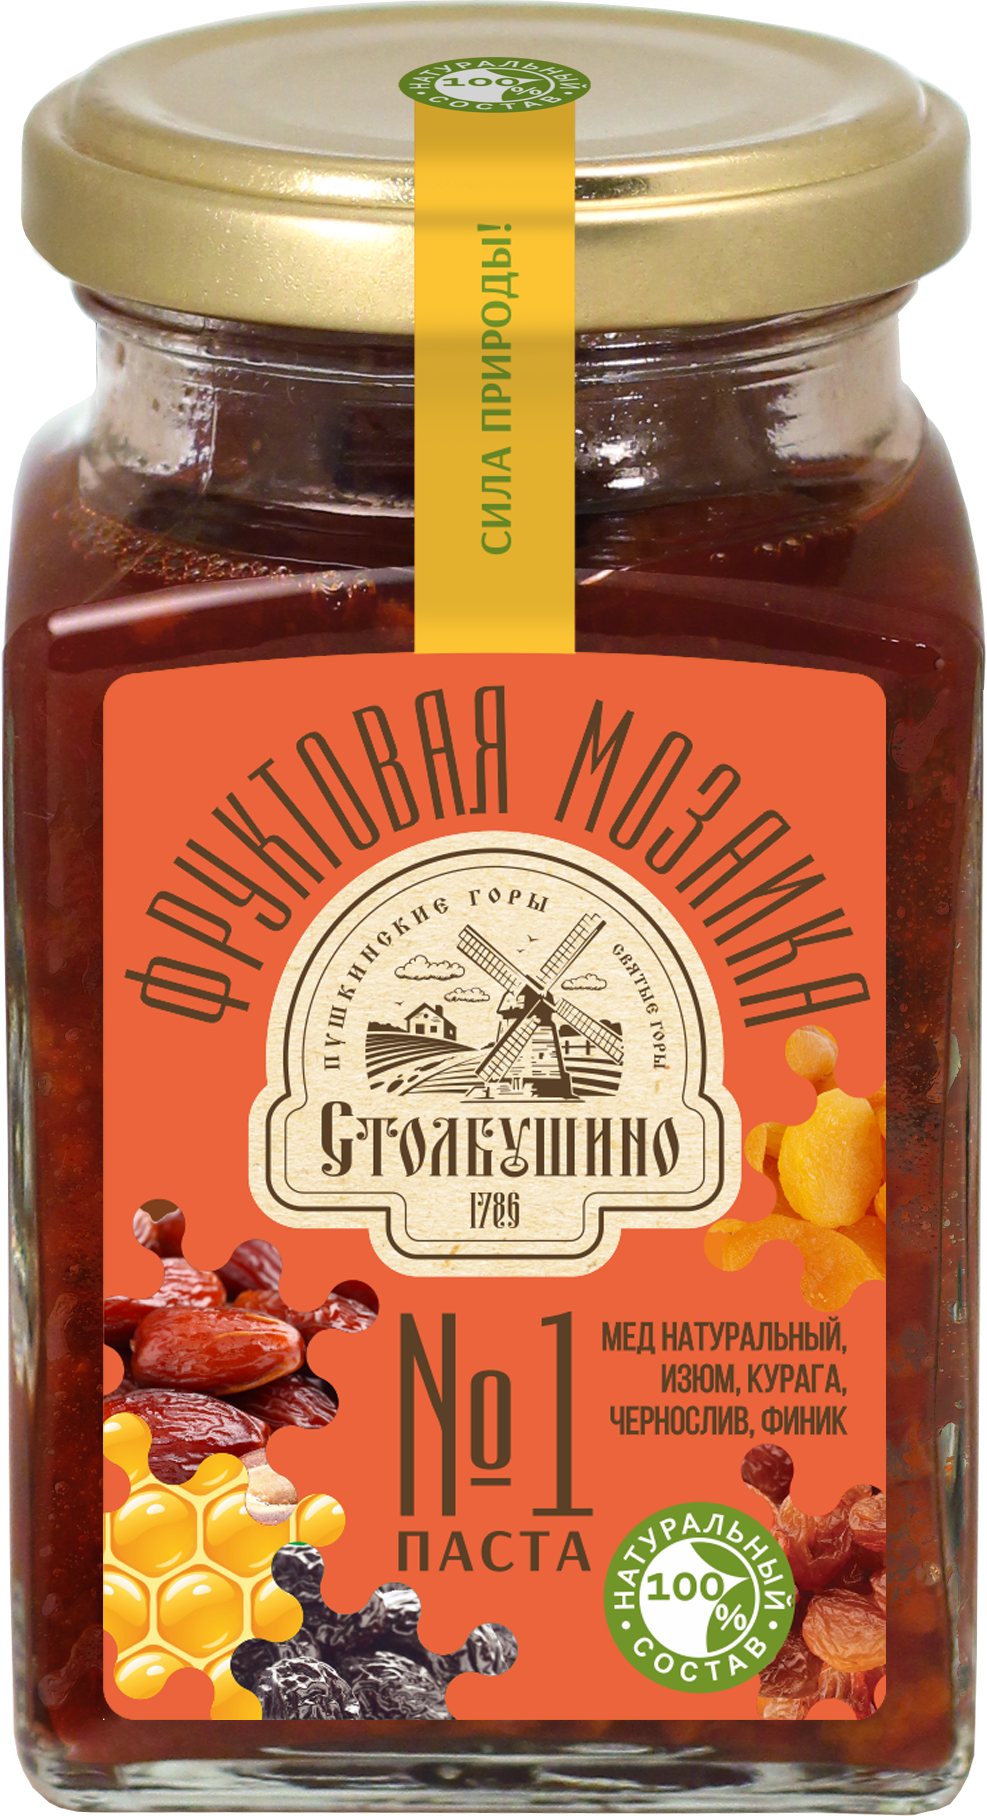 Stolbushinsky Fruit Mosaic Frucht- und Nusspaste (Honig, Sultaninen, Aprikosen, Pflaumen, Datteln) Nr. 1    